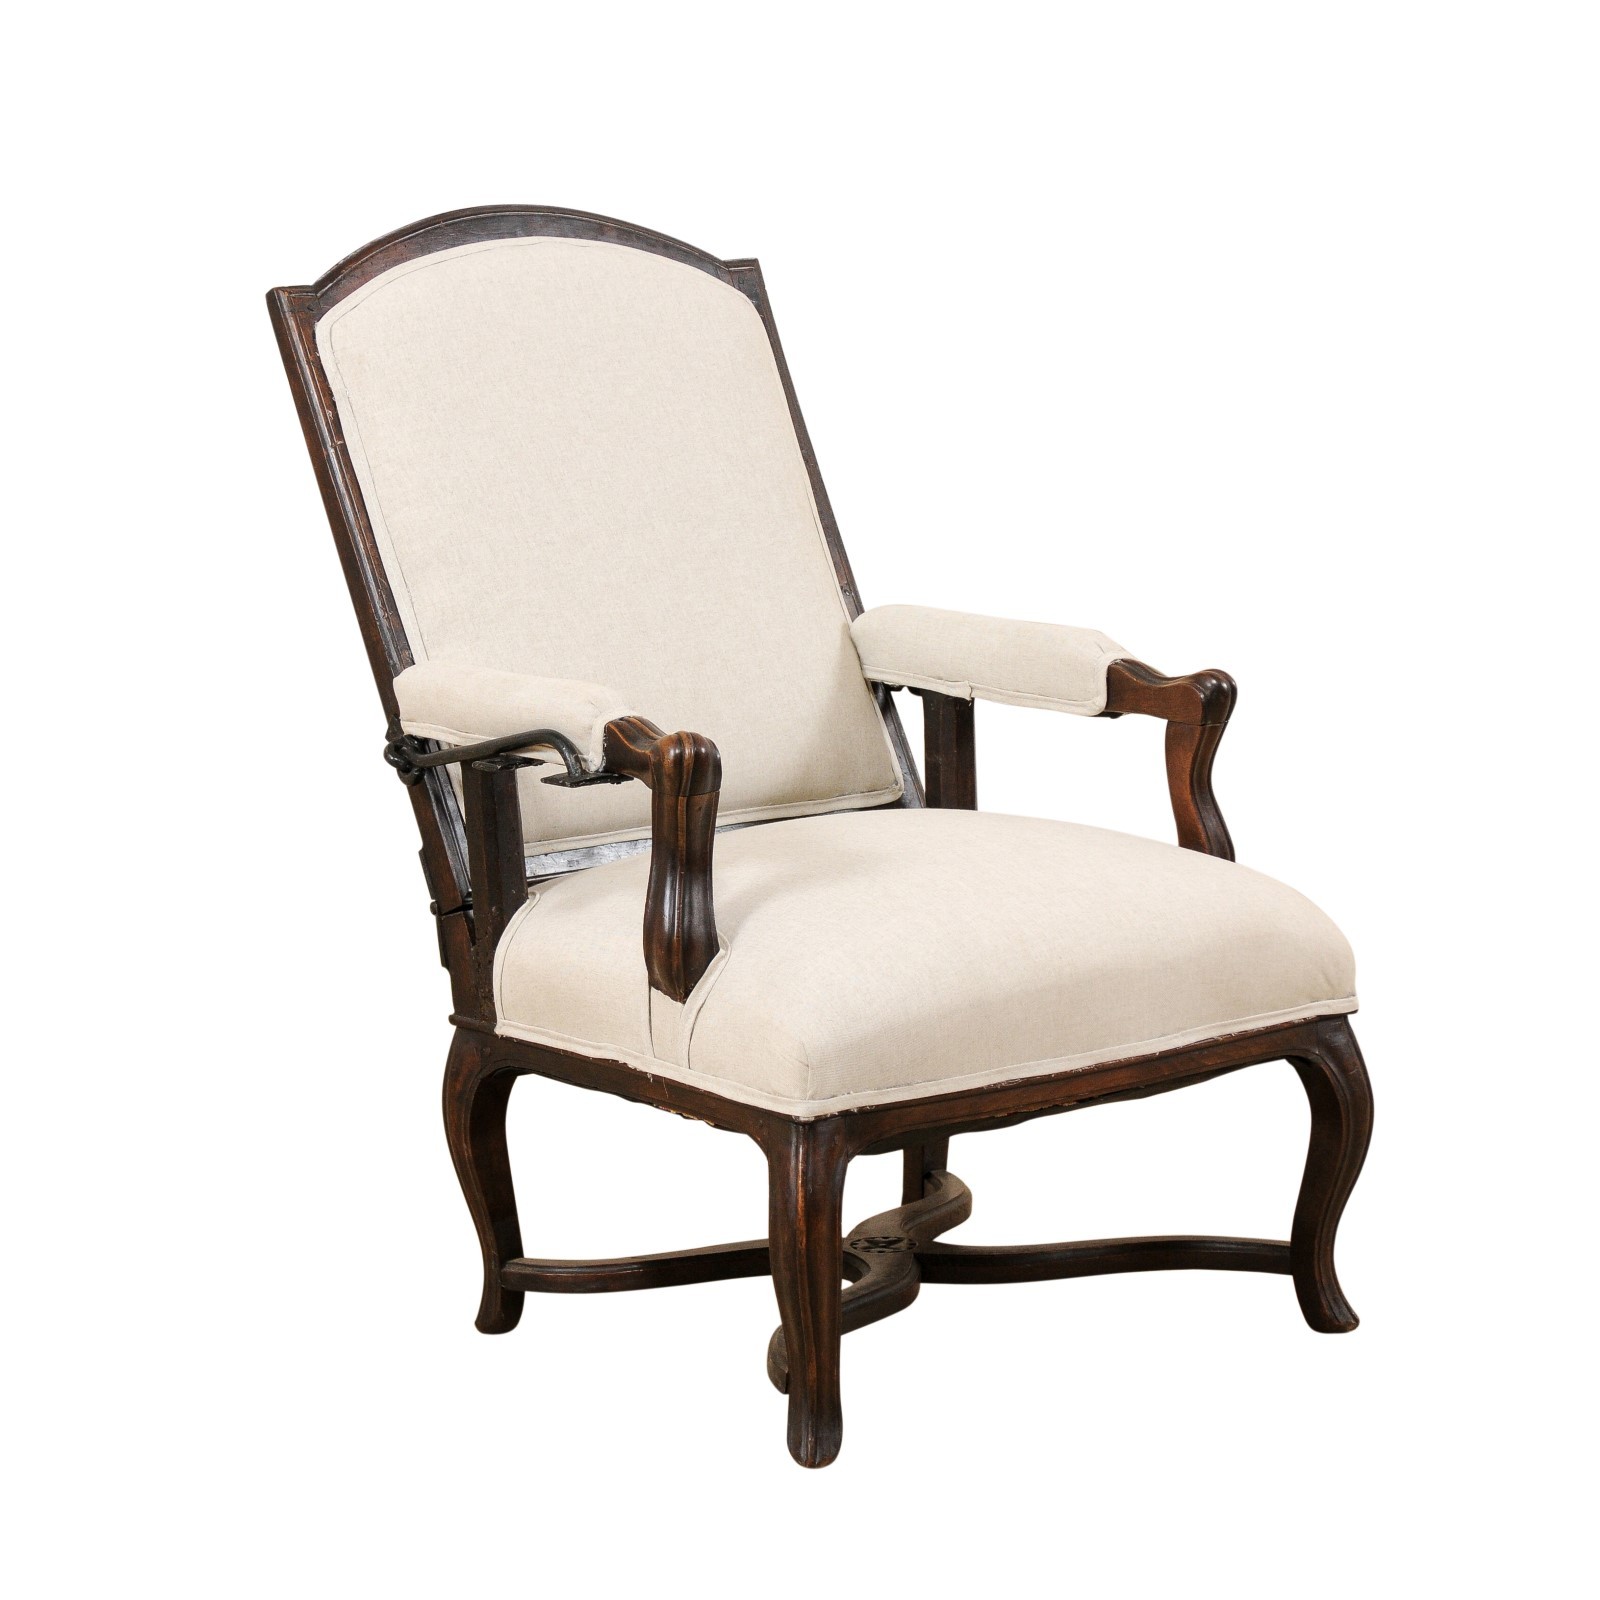 Early 19th C. Italian Reclining Arm Chair 